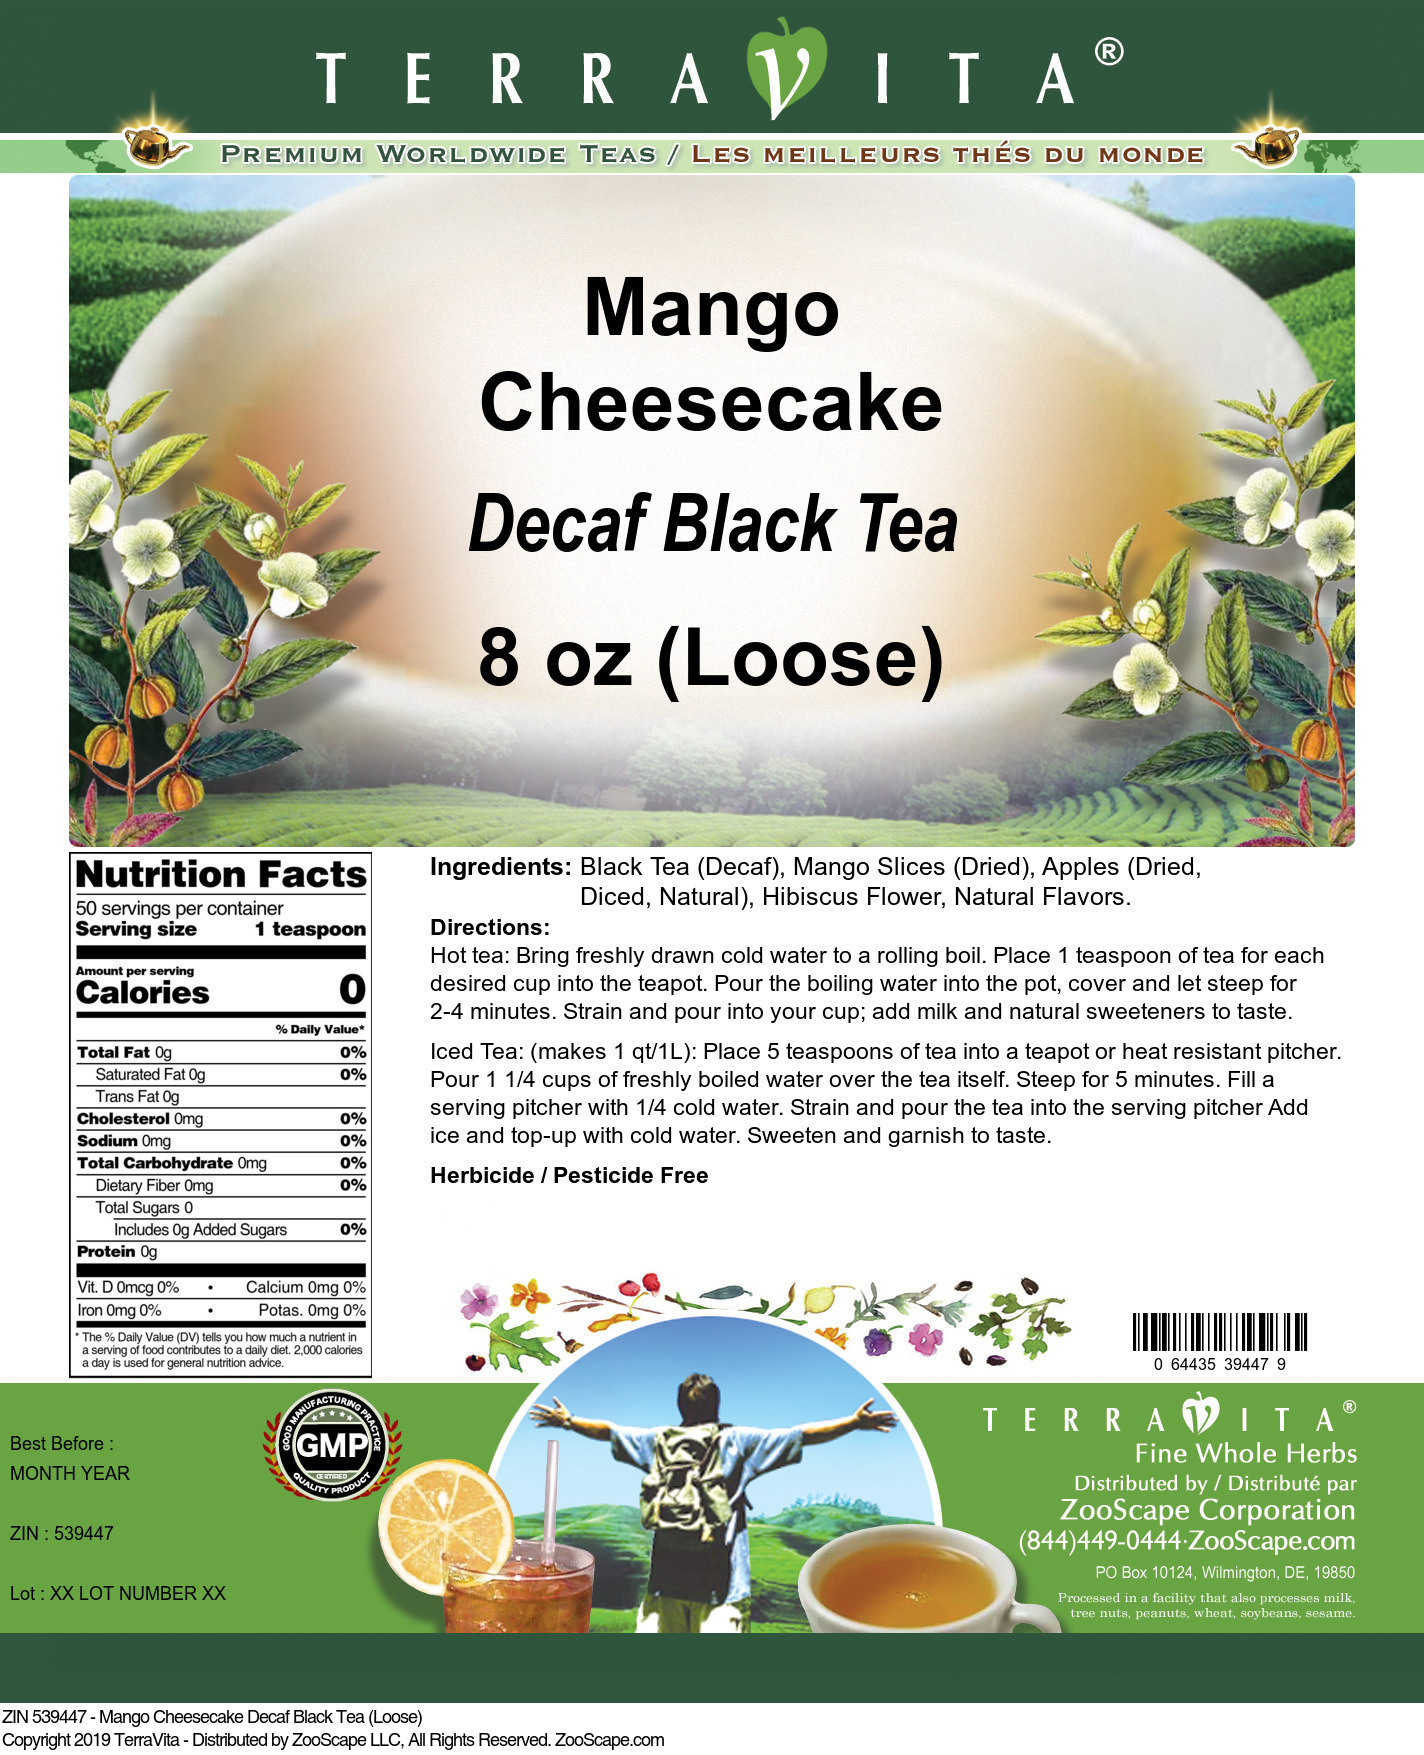 Mango Cheesecake Decaf Black Tea (Loose) - Label